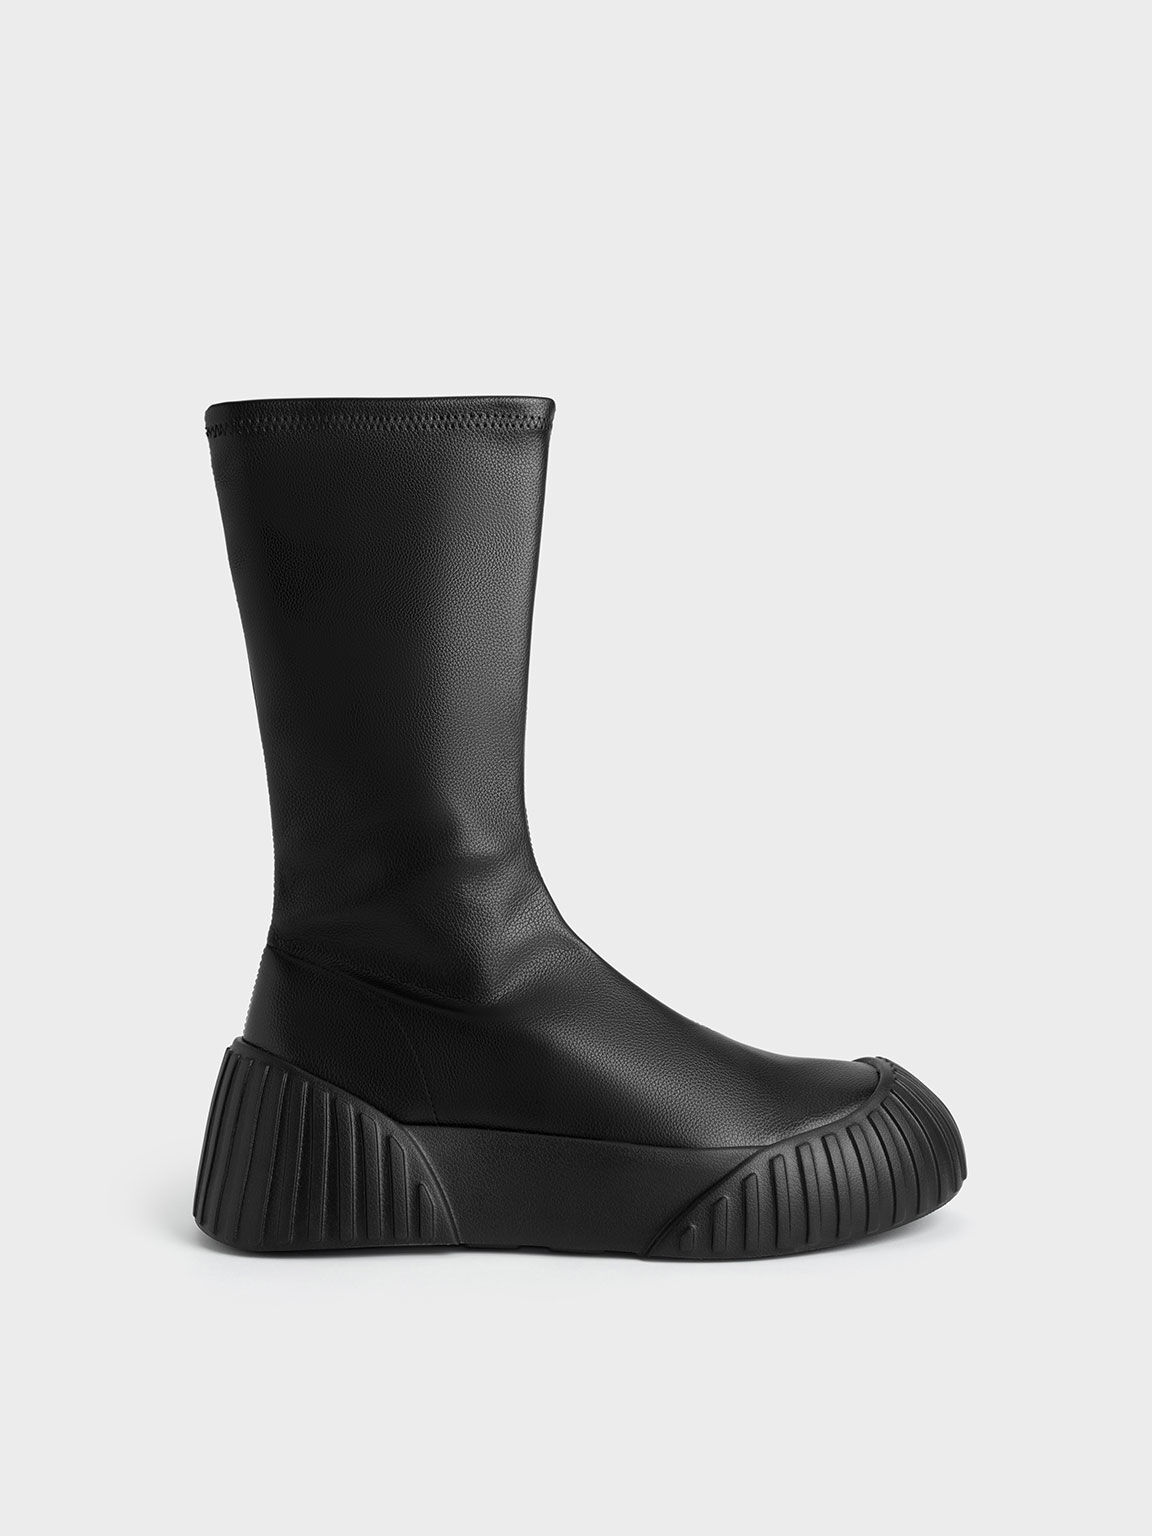 Adrian Chunky Sole Calf Boots, Black, hi-res